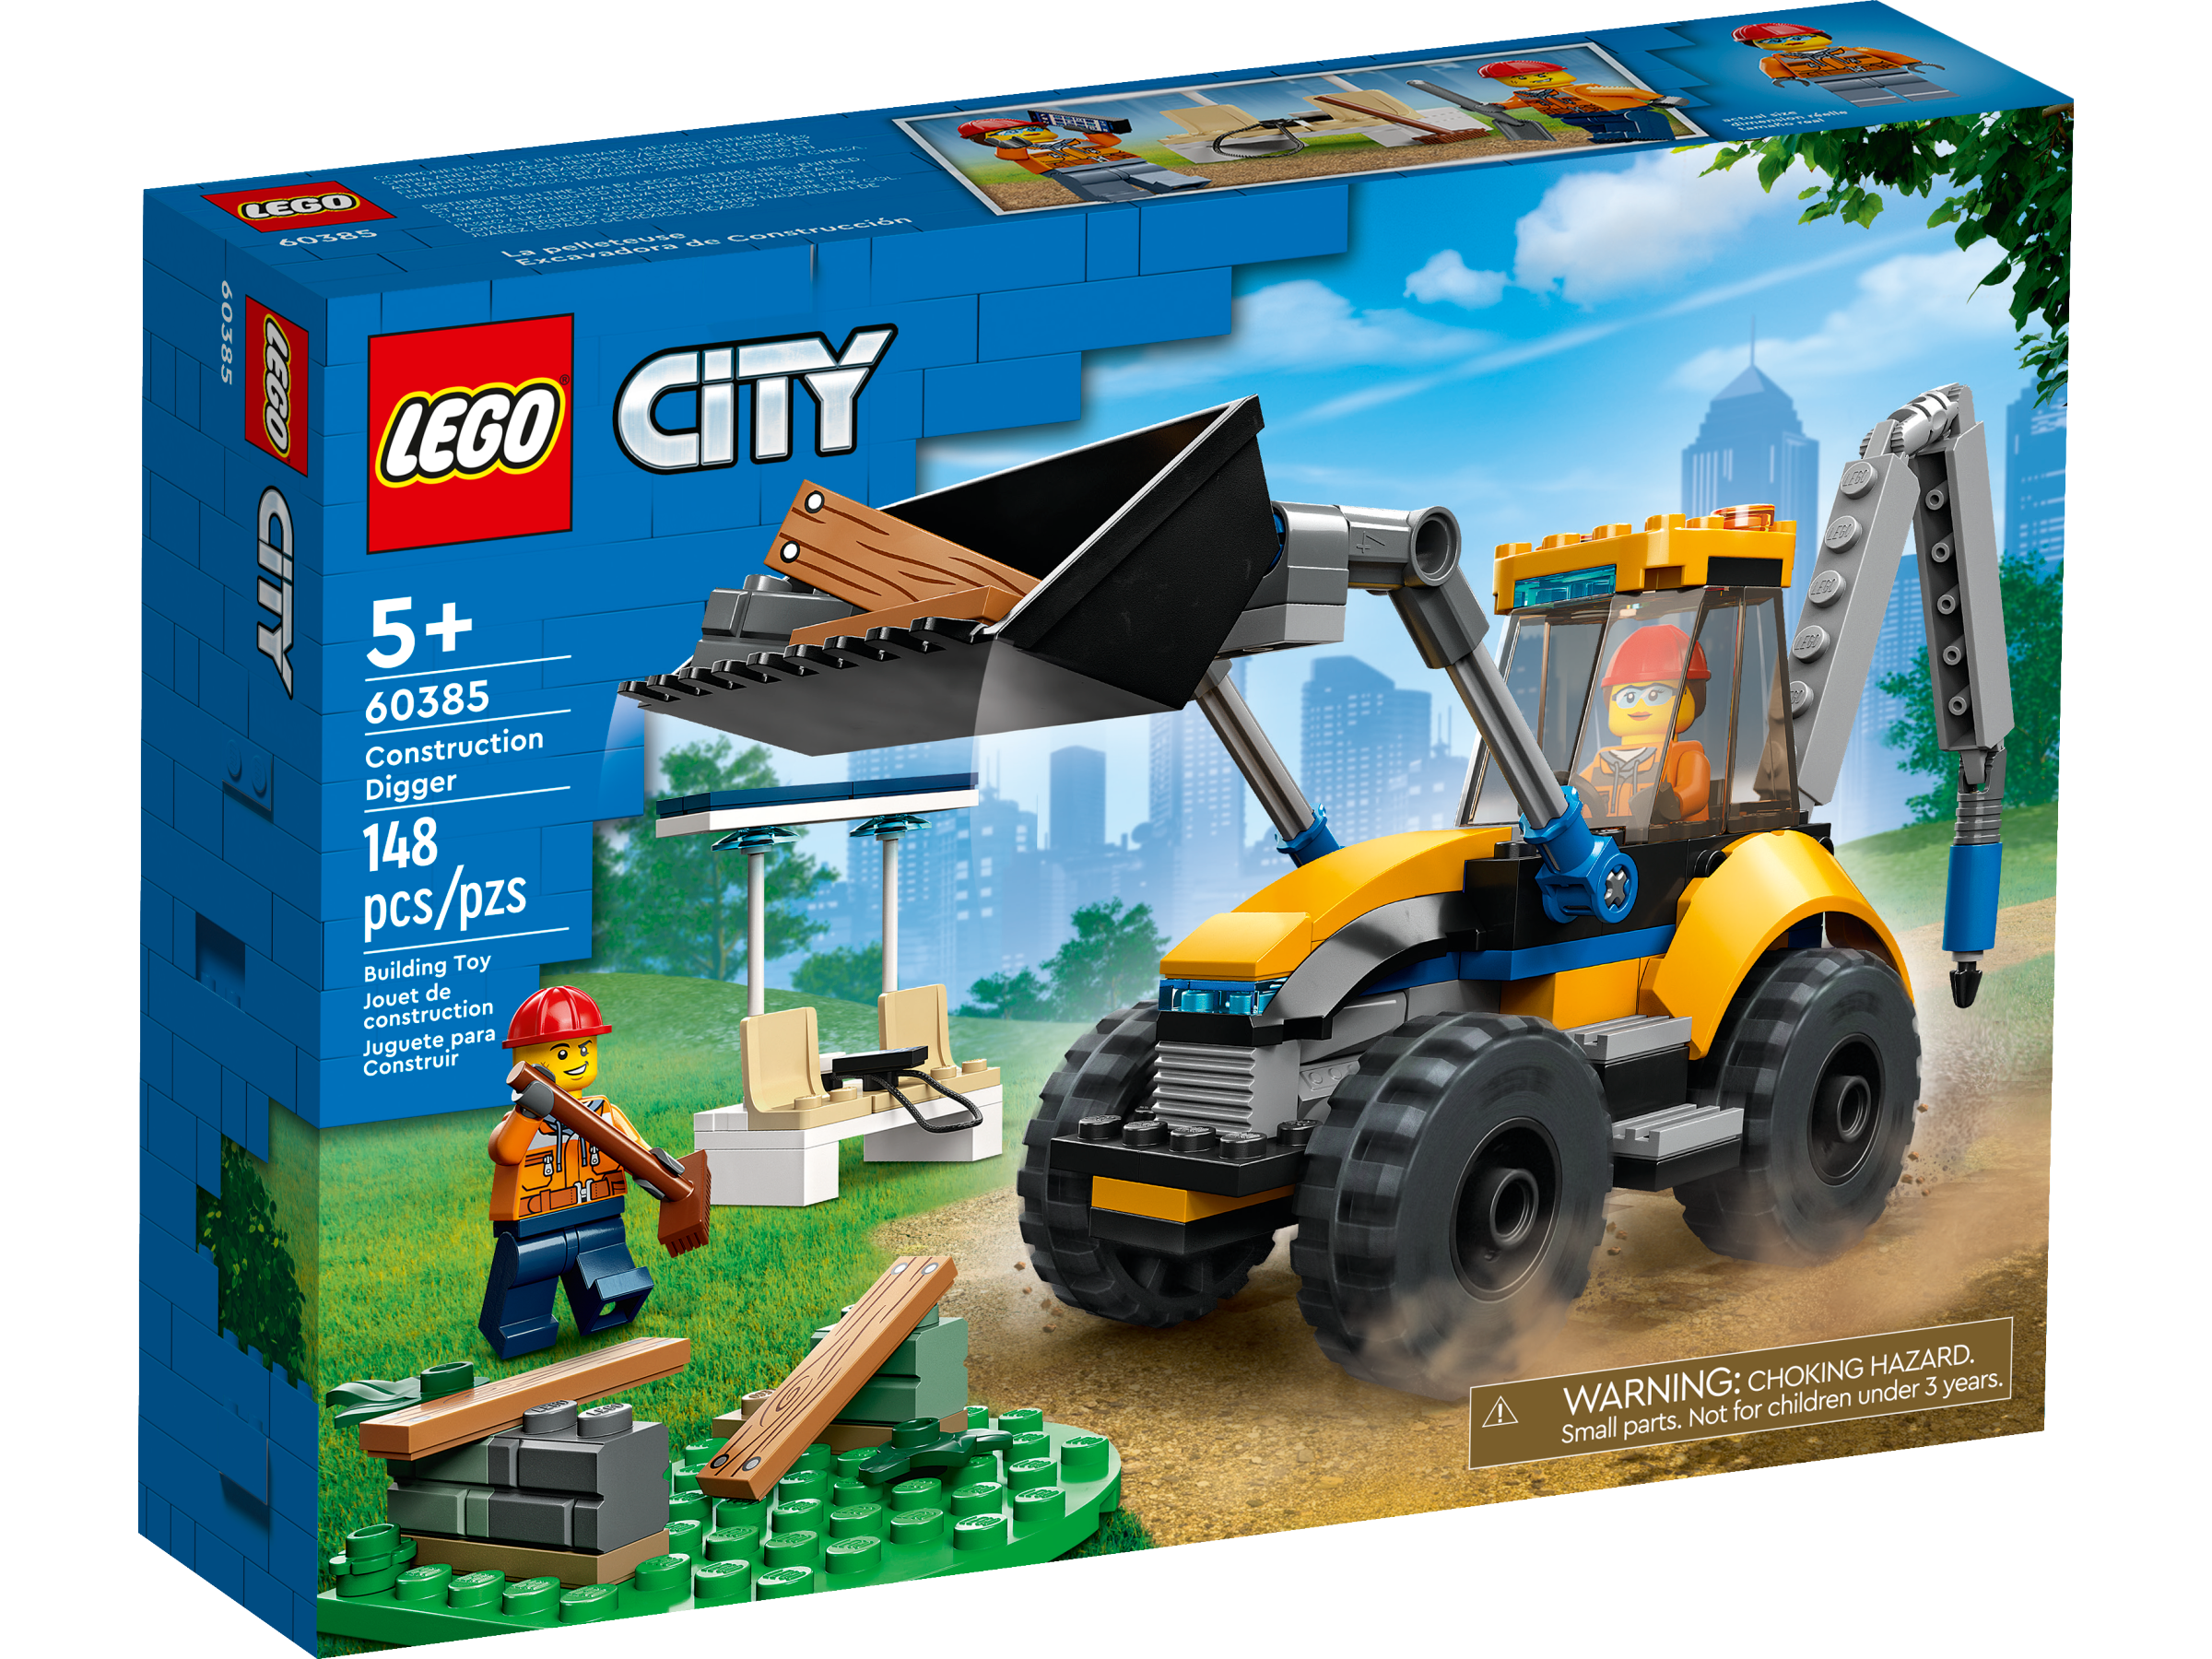 Construction Digger 60385, City